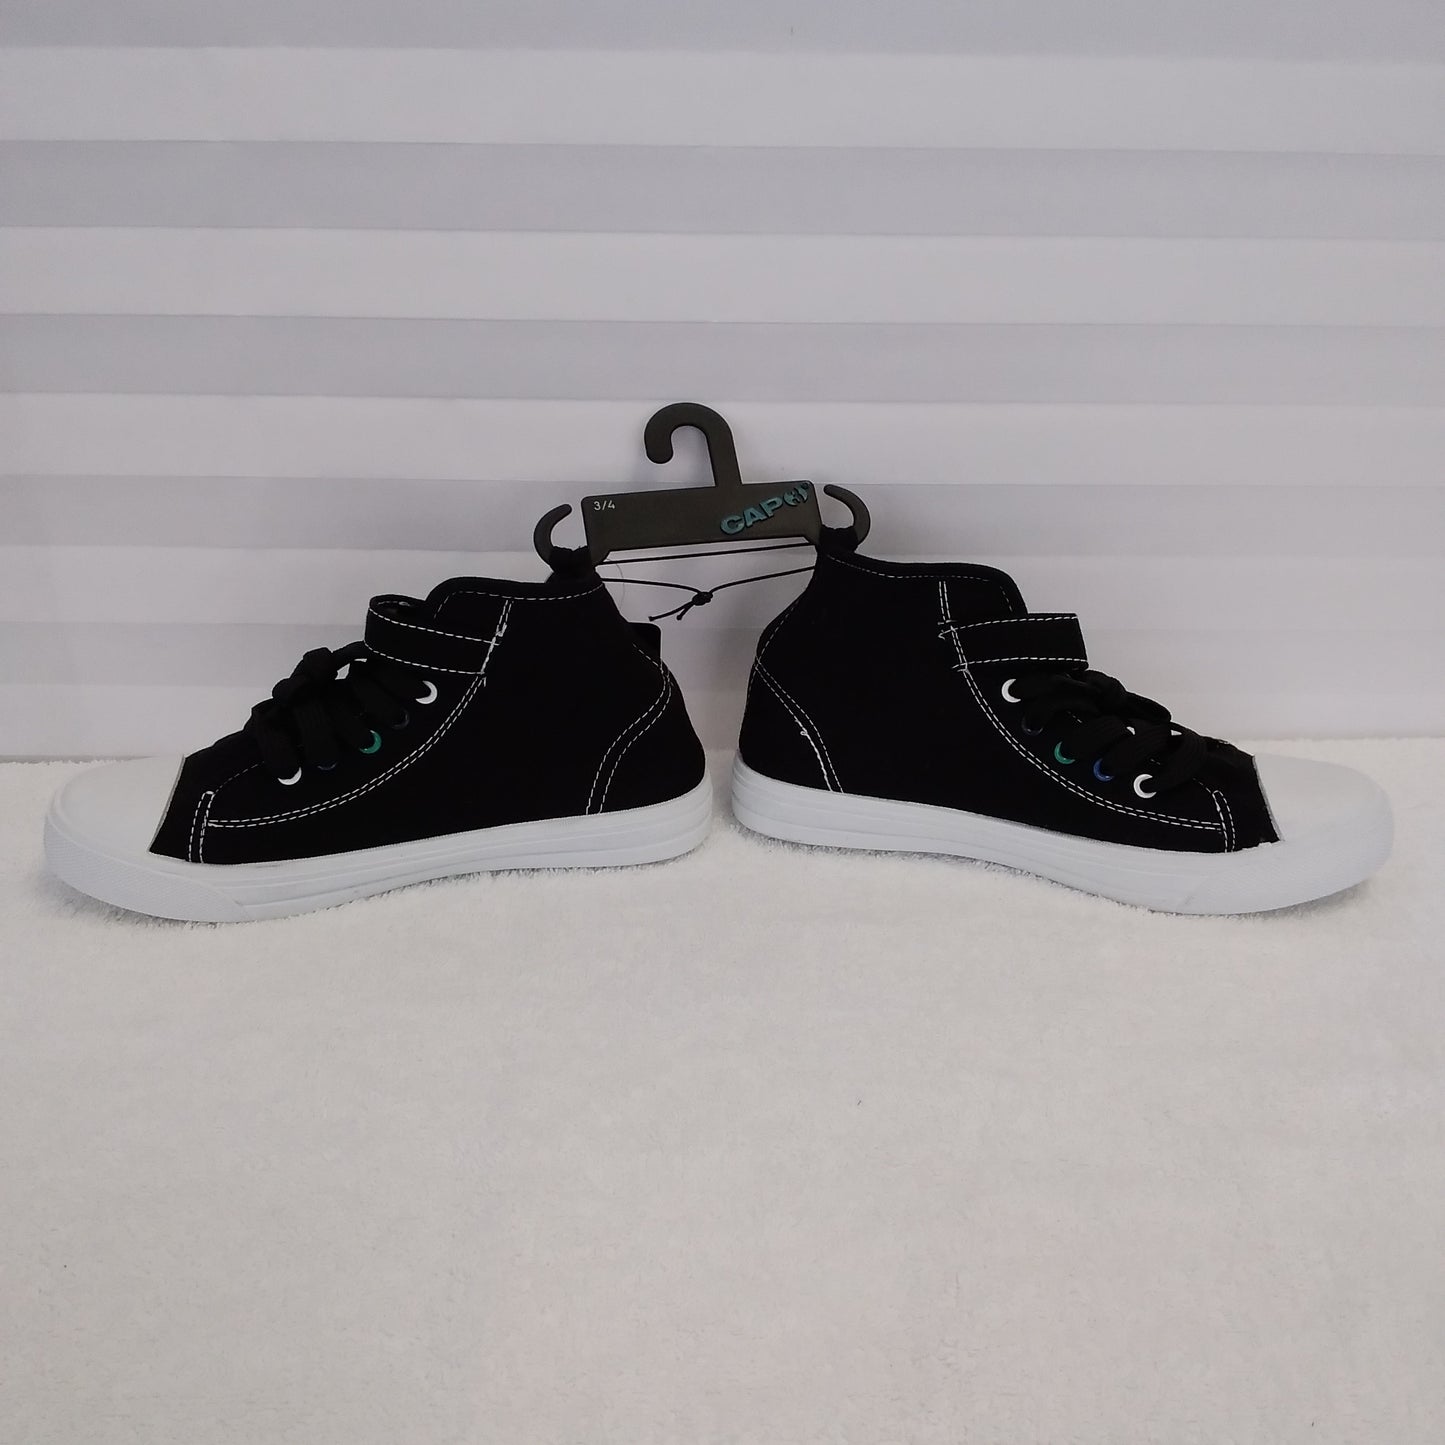 NWT - Capelli Boy's Black Cap High Top Sneakers - Size: 3/4